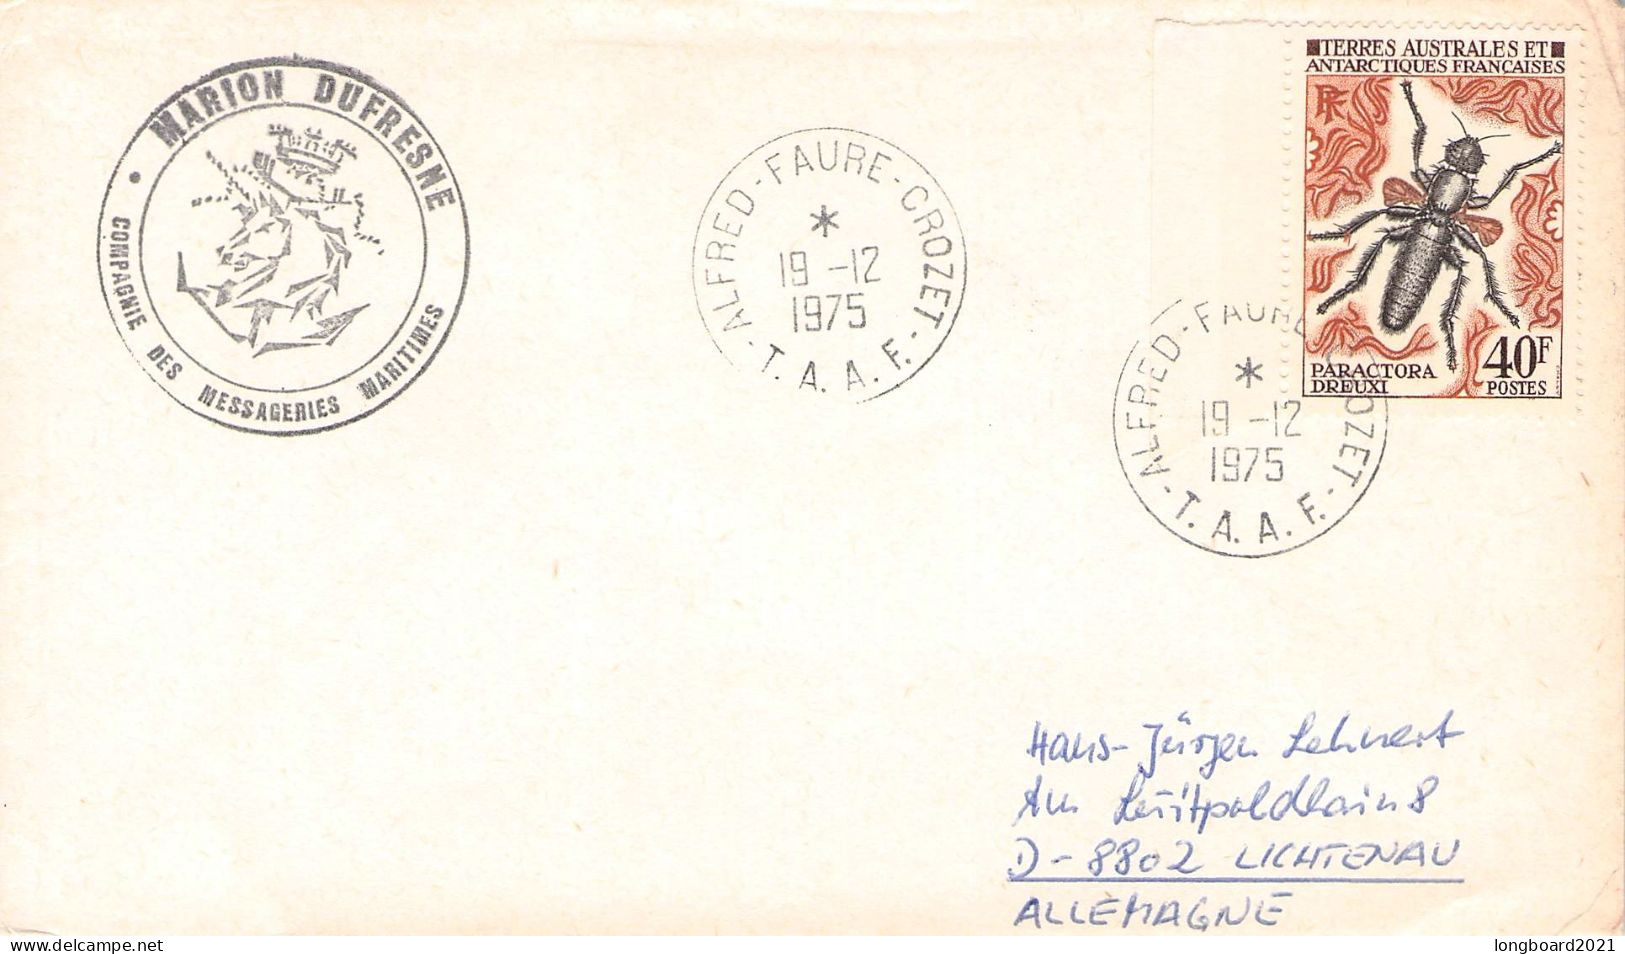 TAAF - PAQUEBOT 1975 ALFRED-FAURE-CROZET - /DE Mi 72 / *1199 - Lettres & Documents